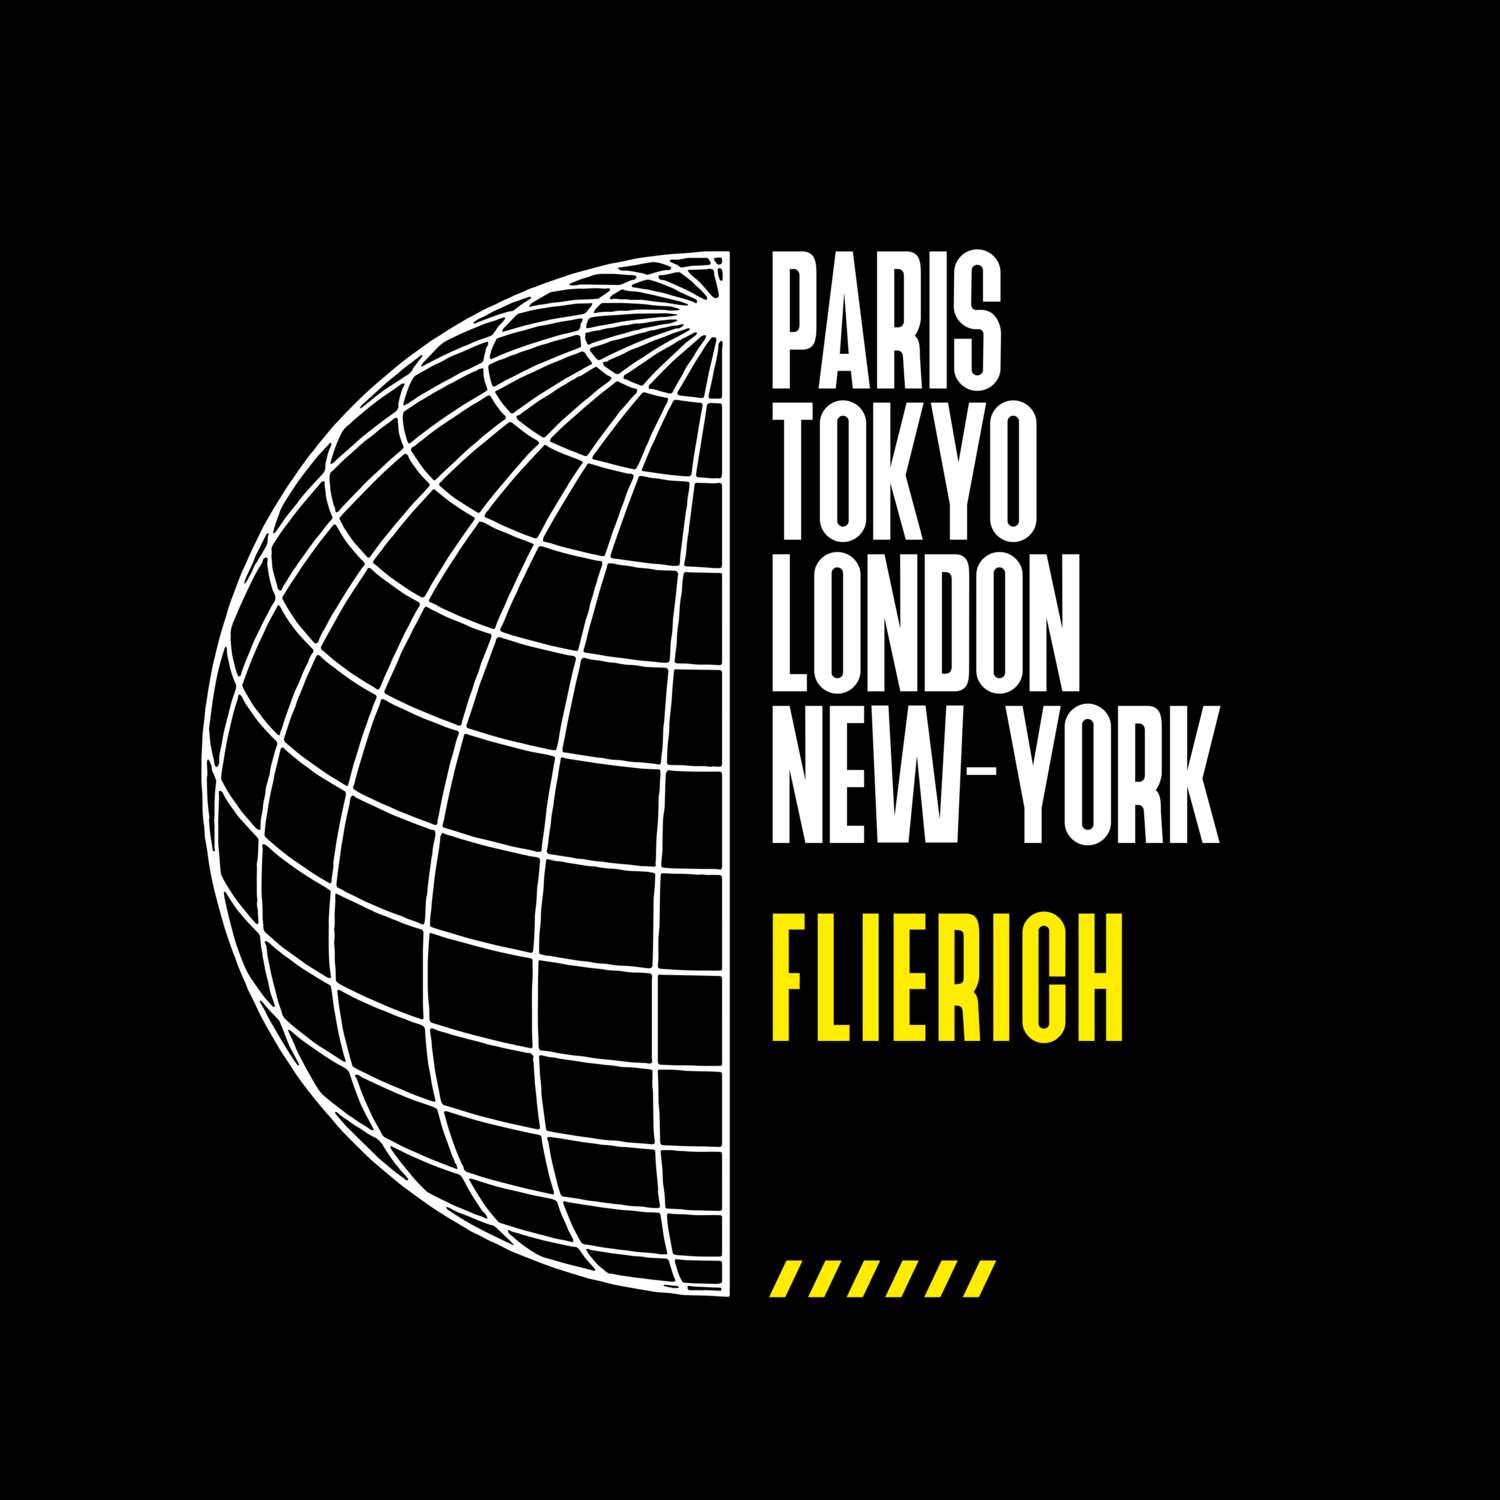 Flierich T-Shirt »Paris Tokyo London«